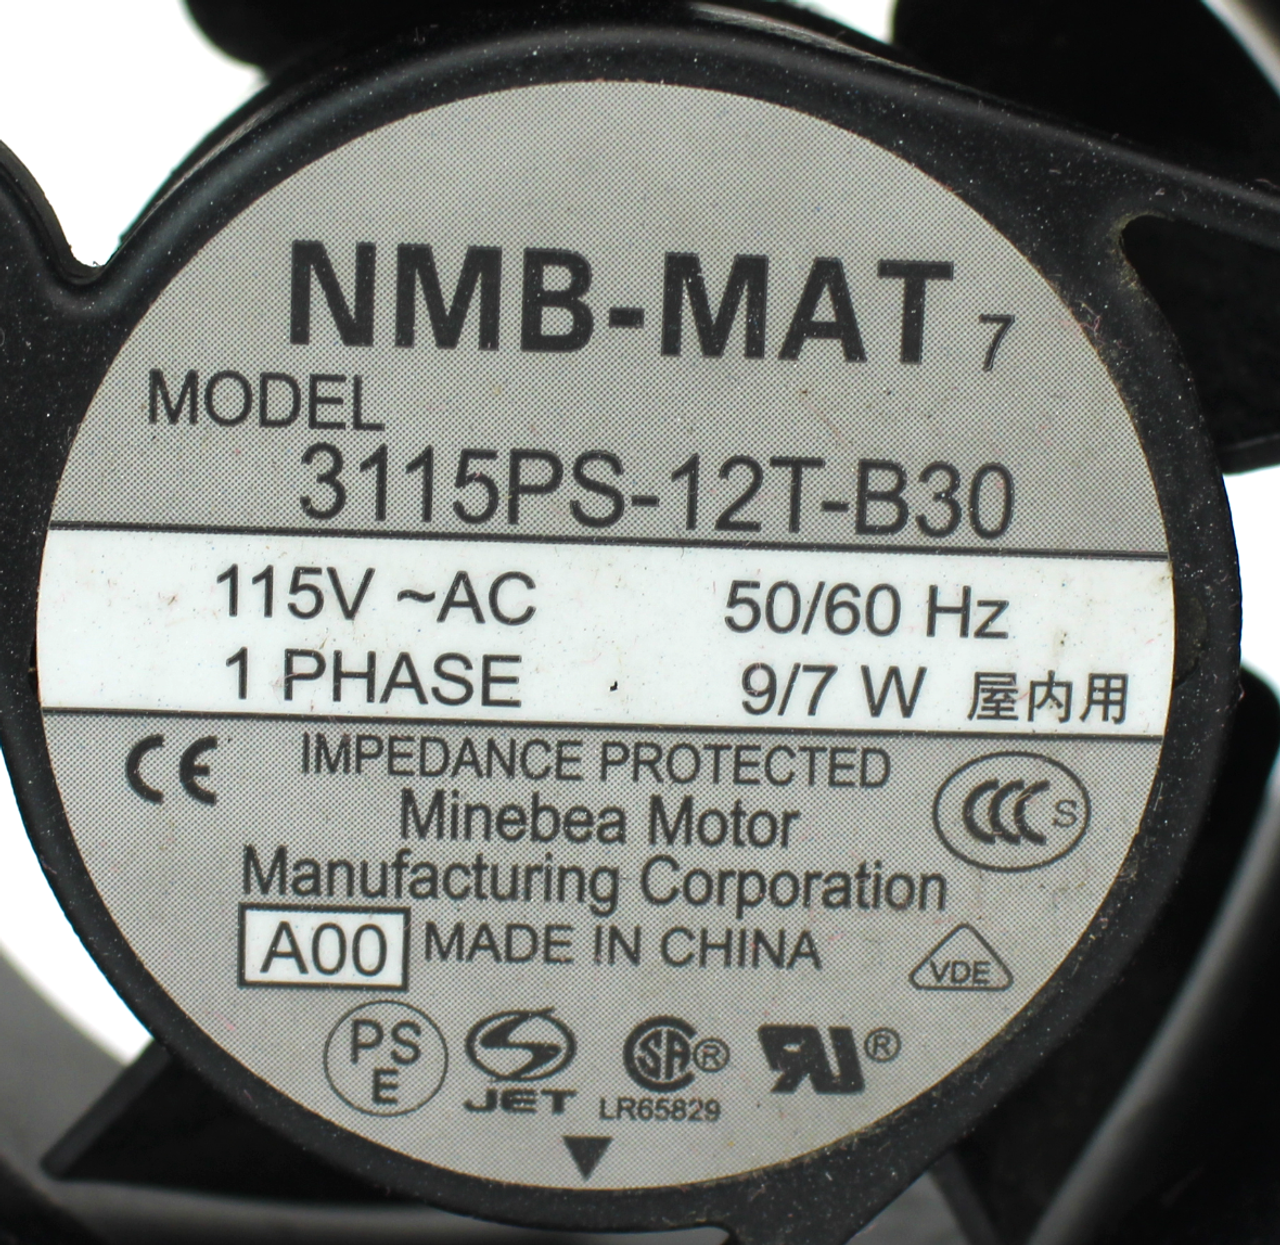 NMB-MAT 3115PS-12T-B30 Cooling Fan Ball Bearing, 115VAC